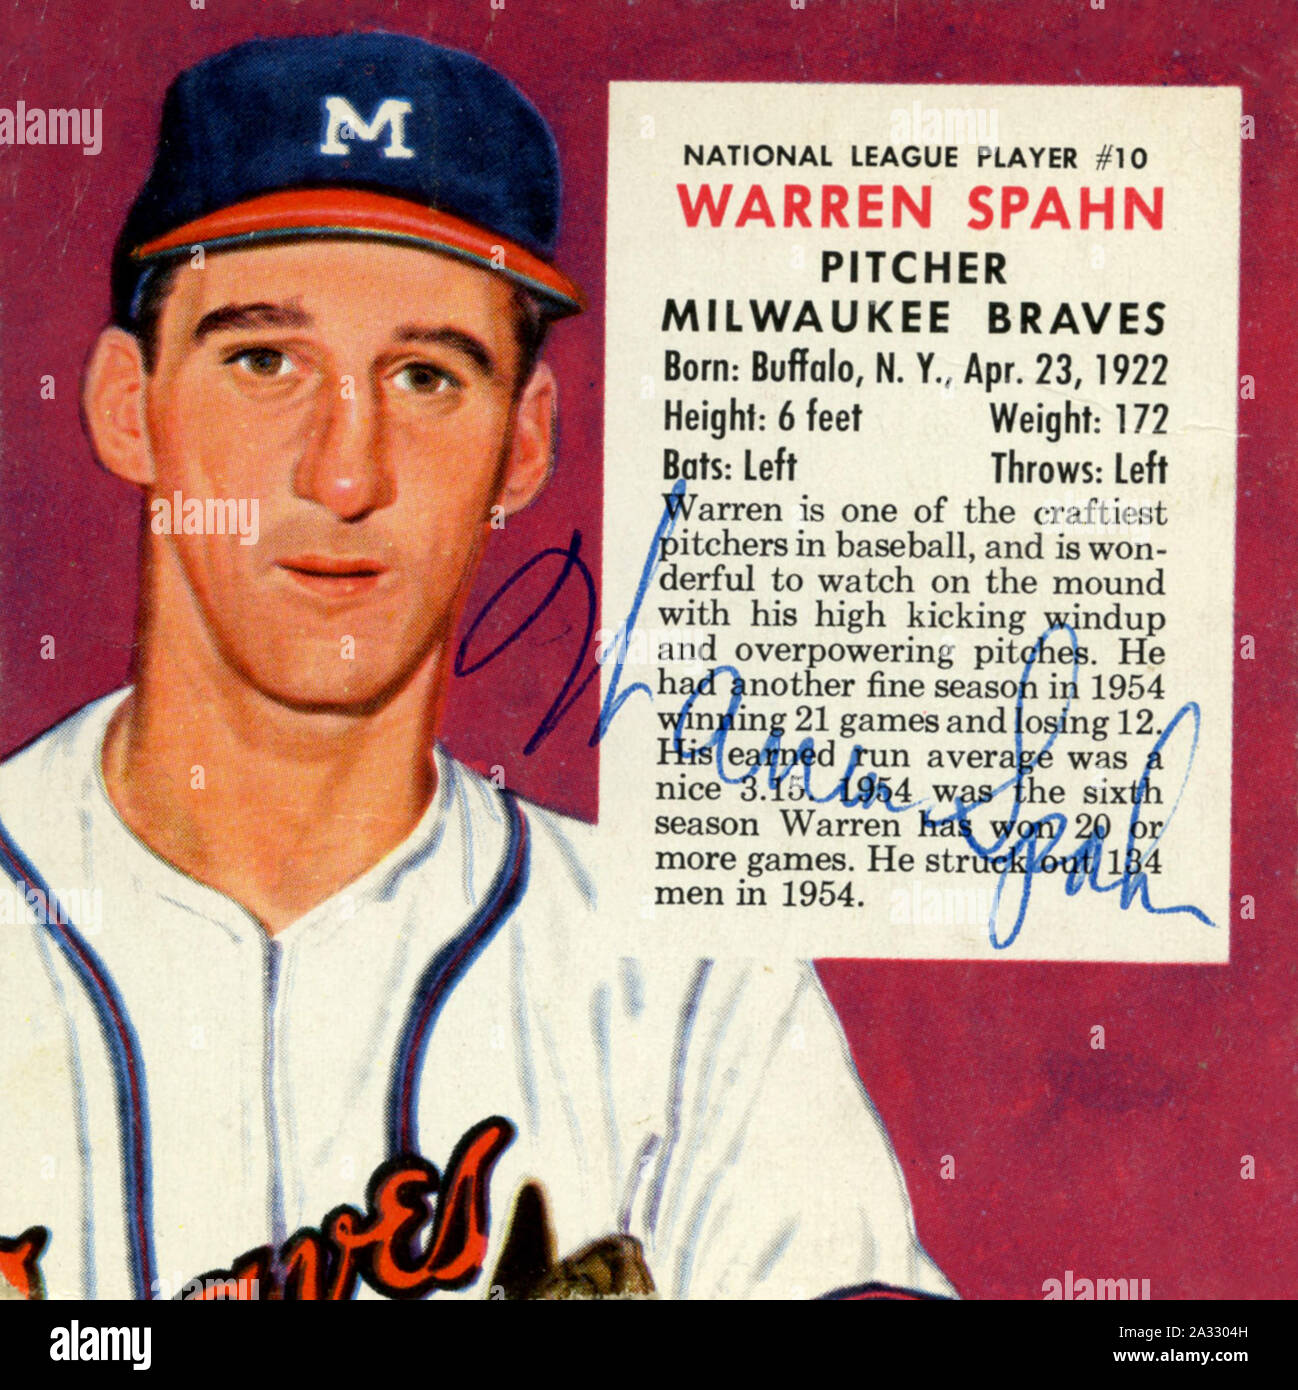 1950s Era Red Man Tabak baseball Card, die Hall of Fame pithcer Warren Spahn. Stockfoto